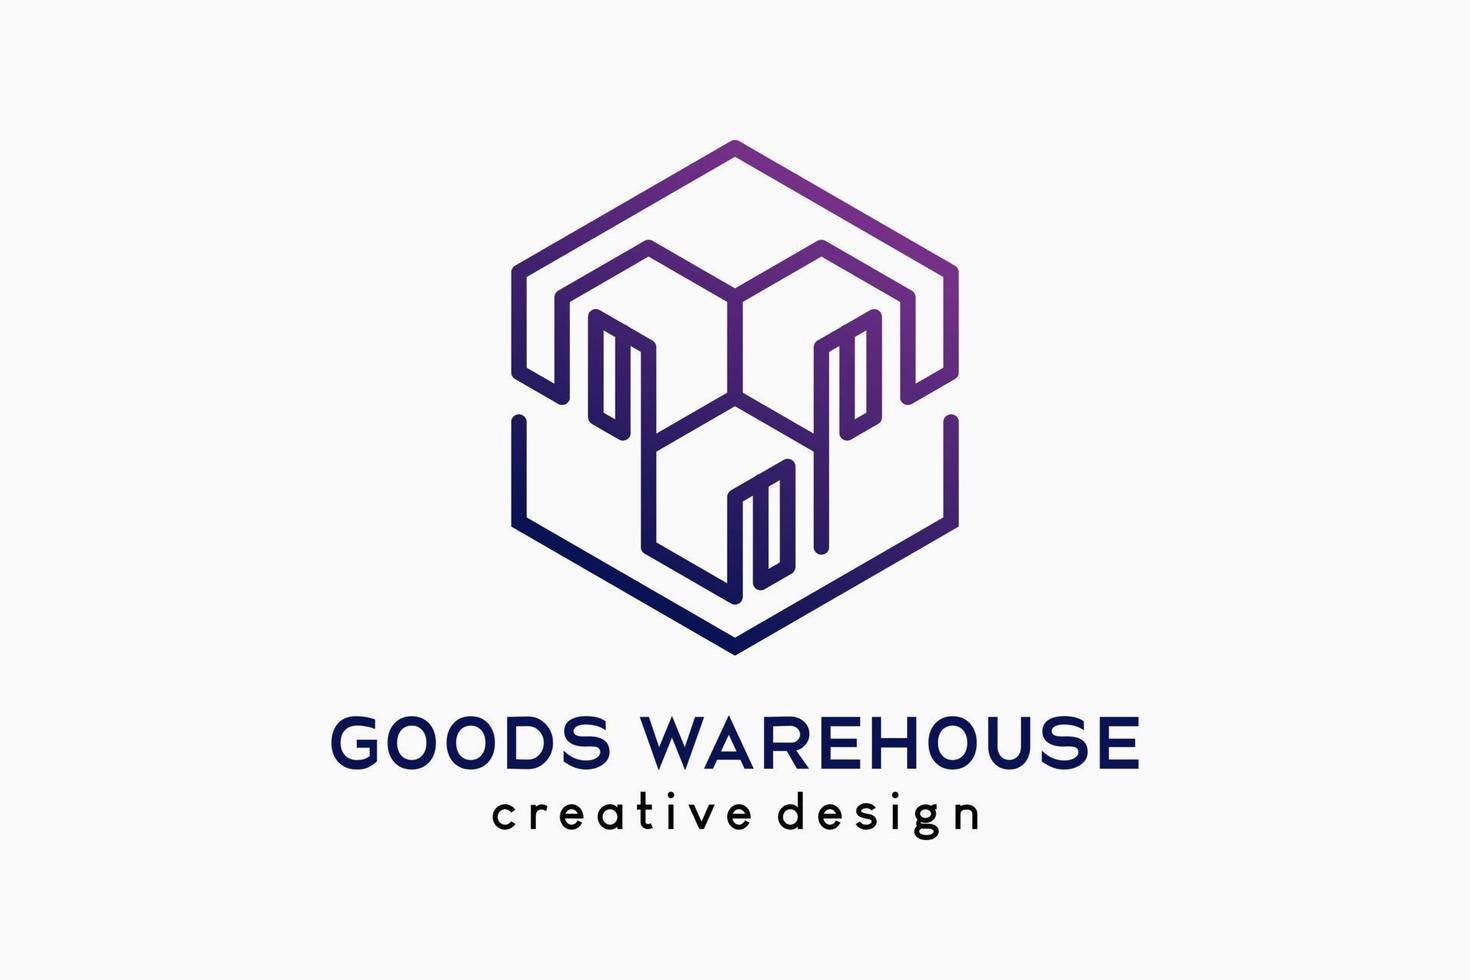 Warehouse or goods house logo design, box icon with line art concept in a hexagon vector